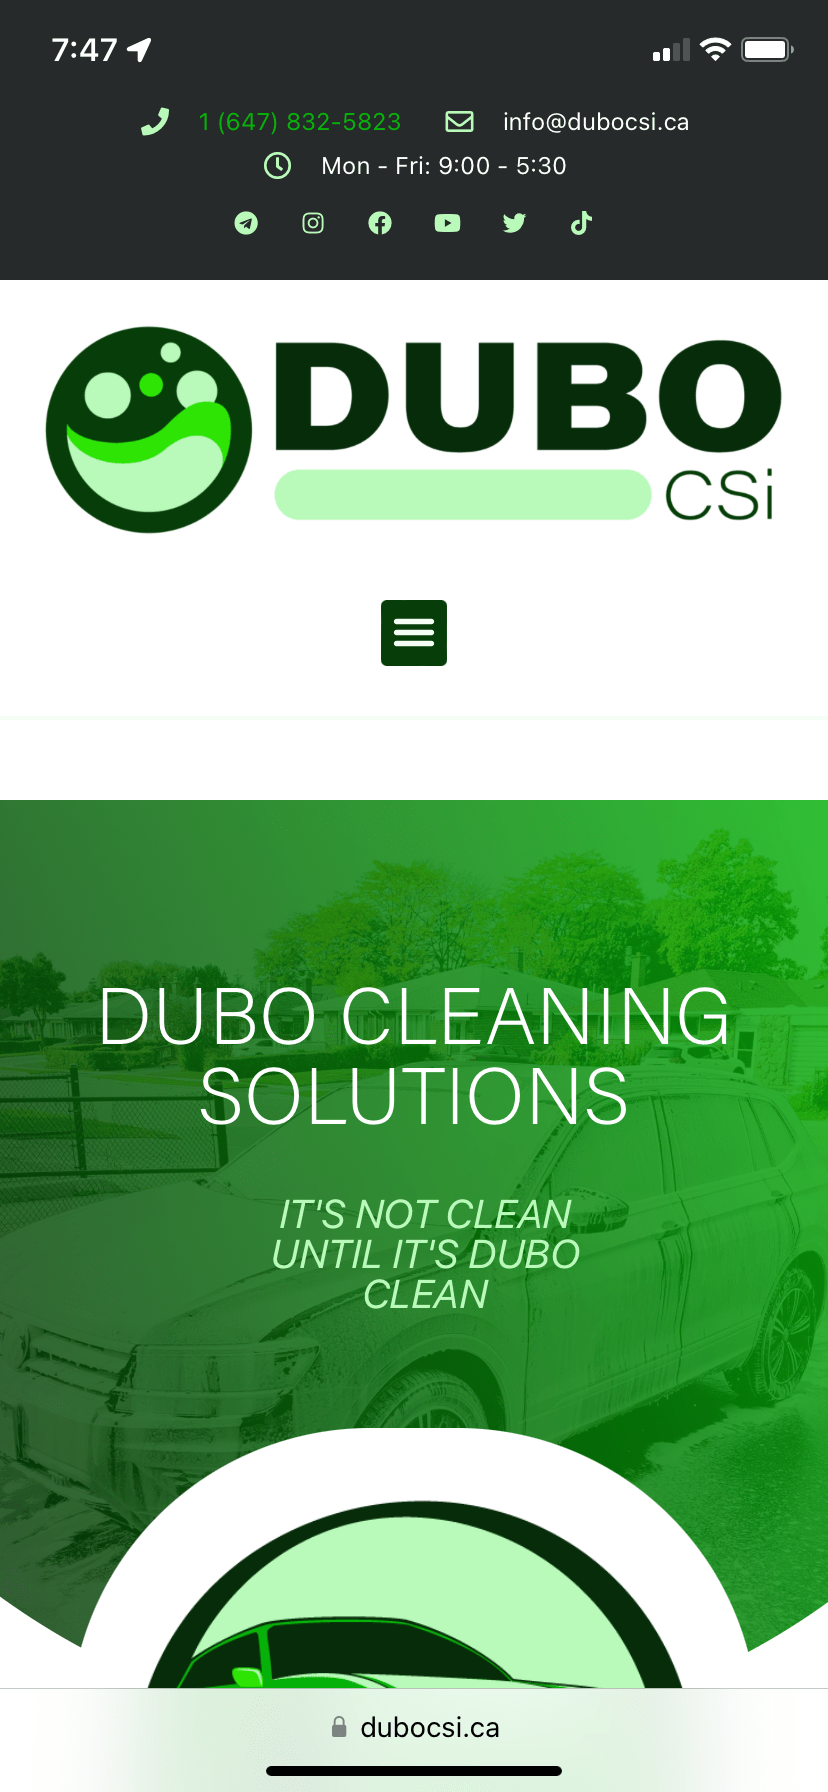 Dubo CSi Website on iPhone